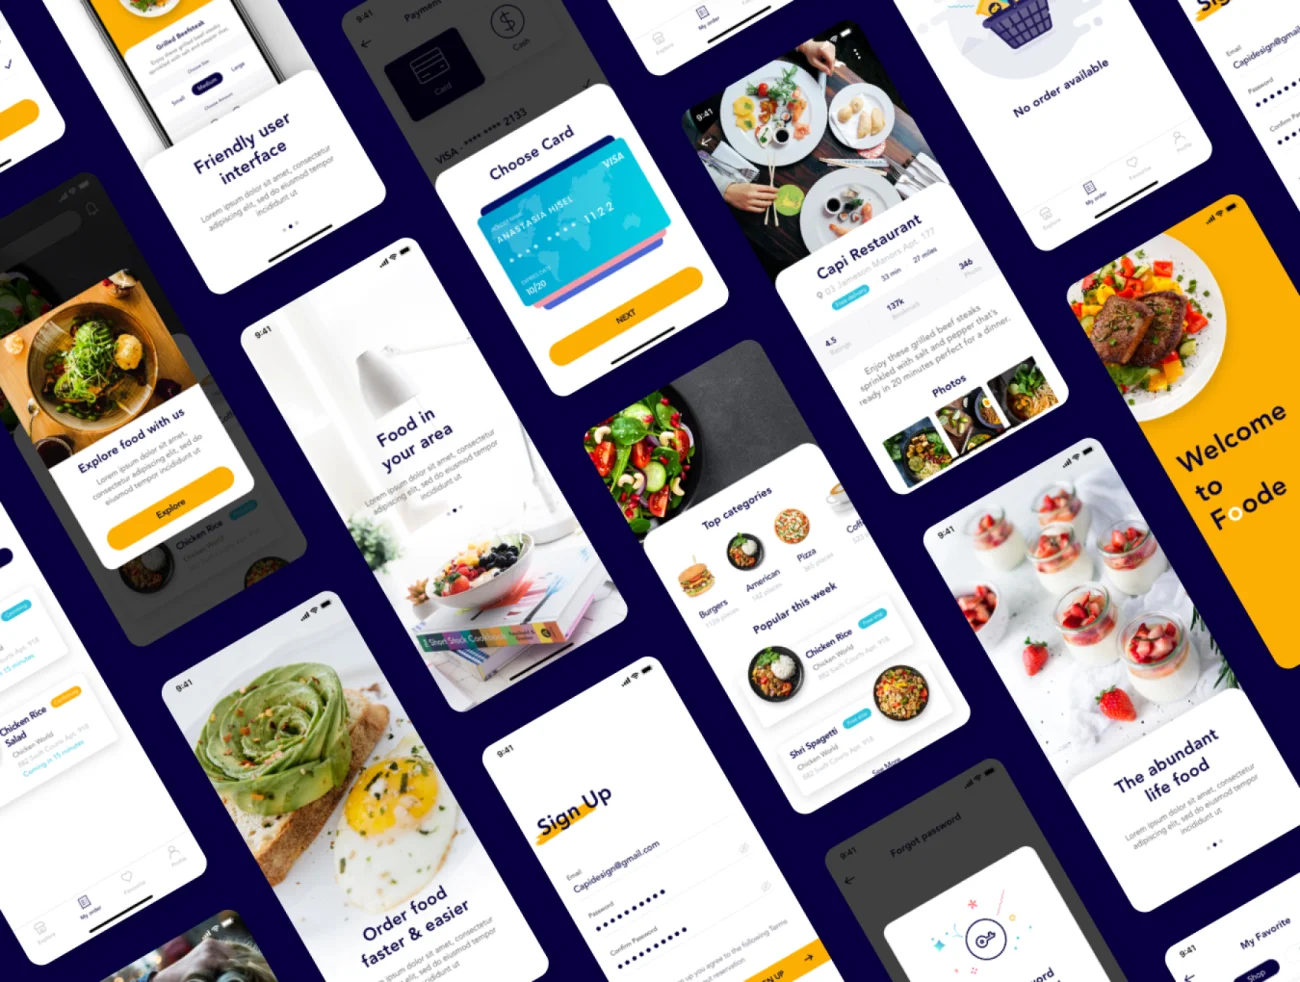 Foode - Best Food Order Mobile App 外卖点餐食品订单应用界面设计-UI/UX、ui套件、主页、介绍、付款、列表、卡片式、应用、引导页、支付、注册、登录页、着陆页、社交、网站、网购、表单、预订-到位啦UI